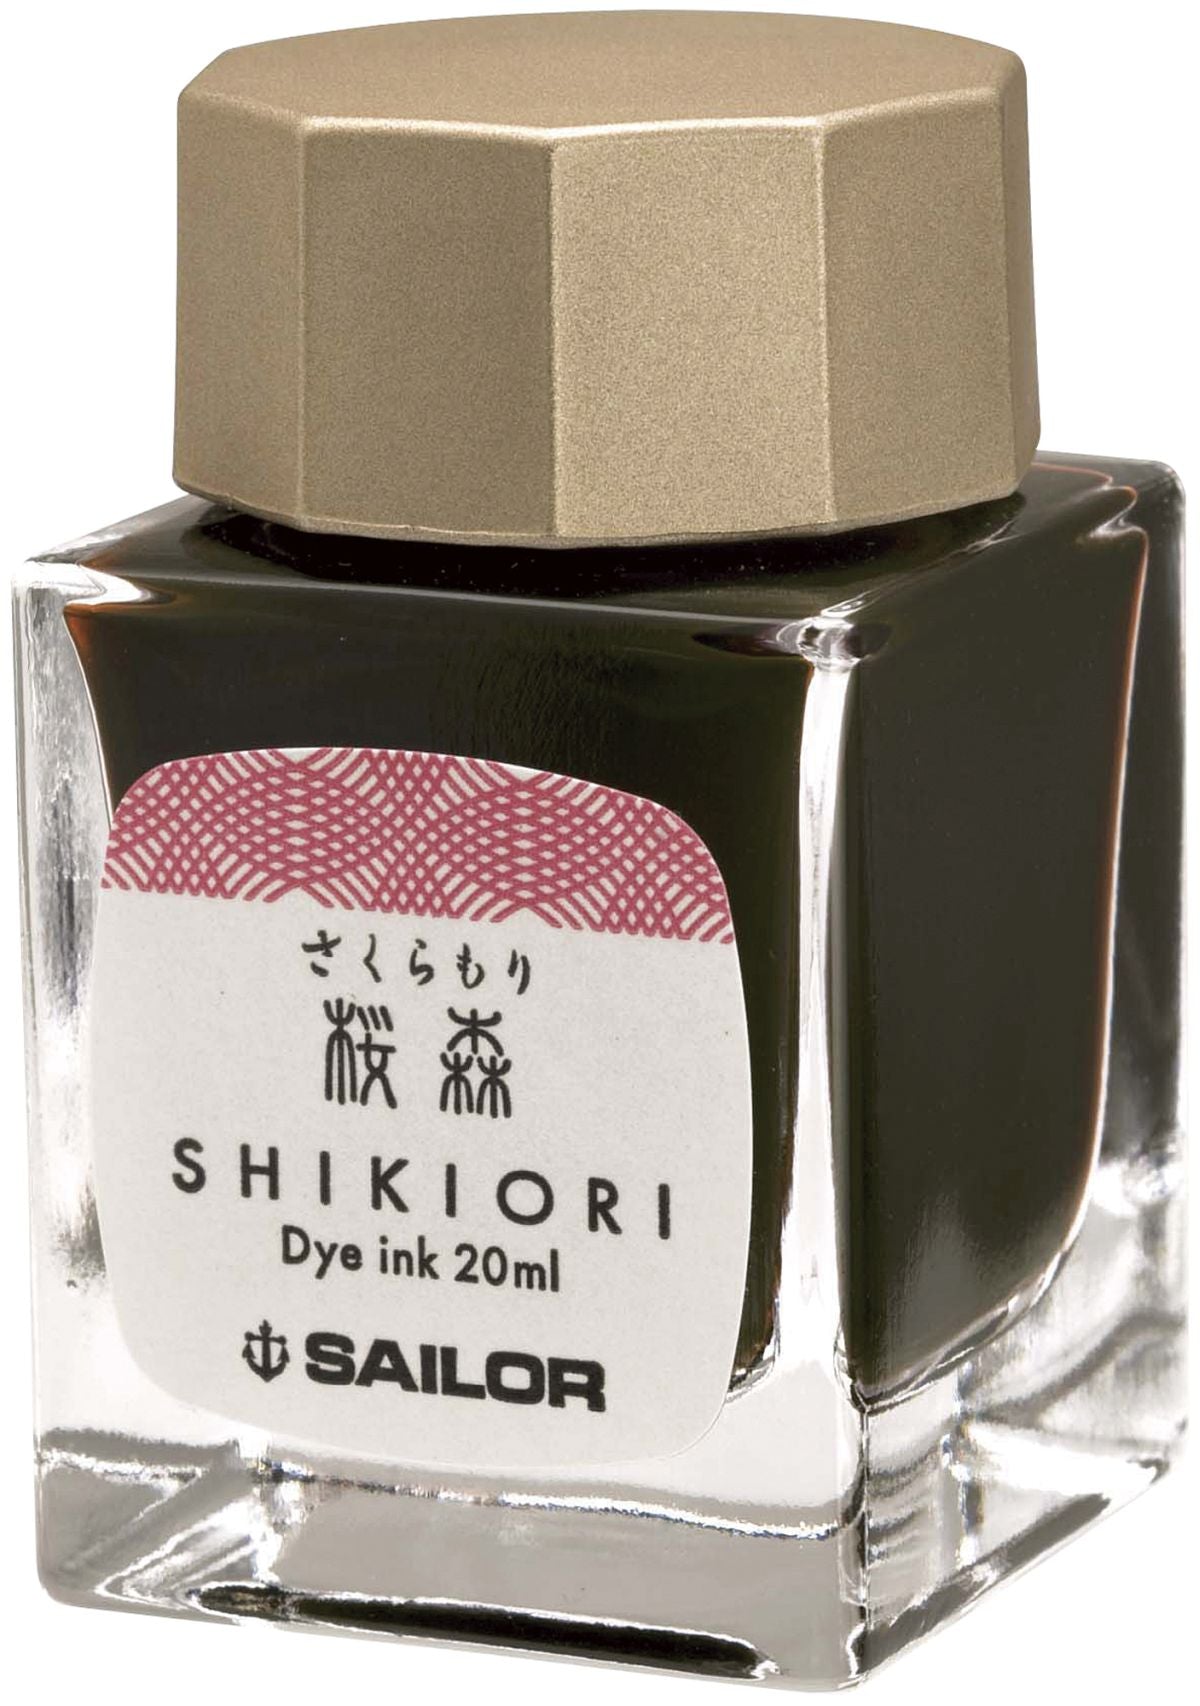 Sailor jentle ink - Sakuramori